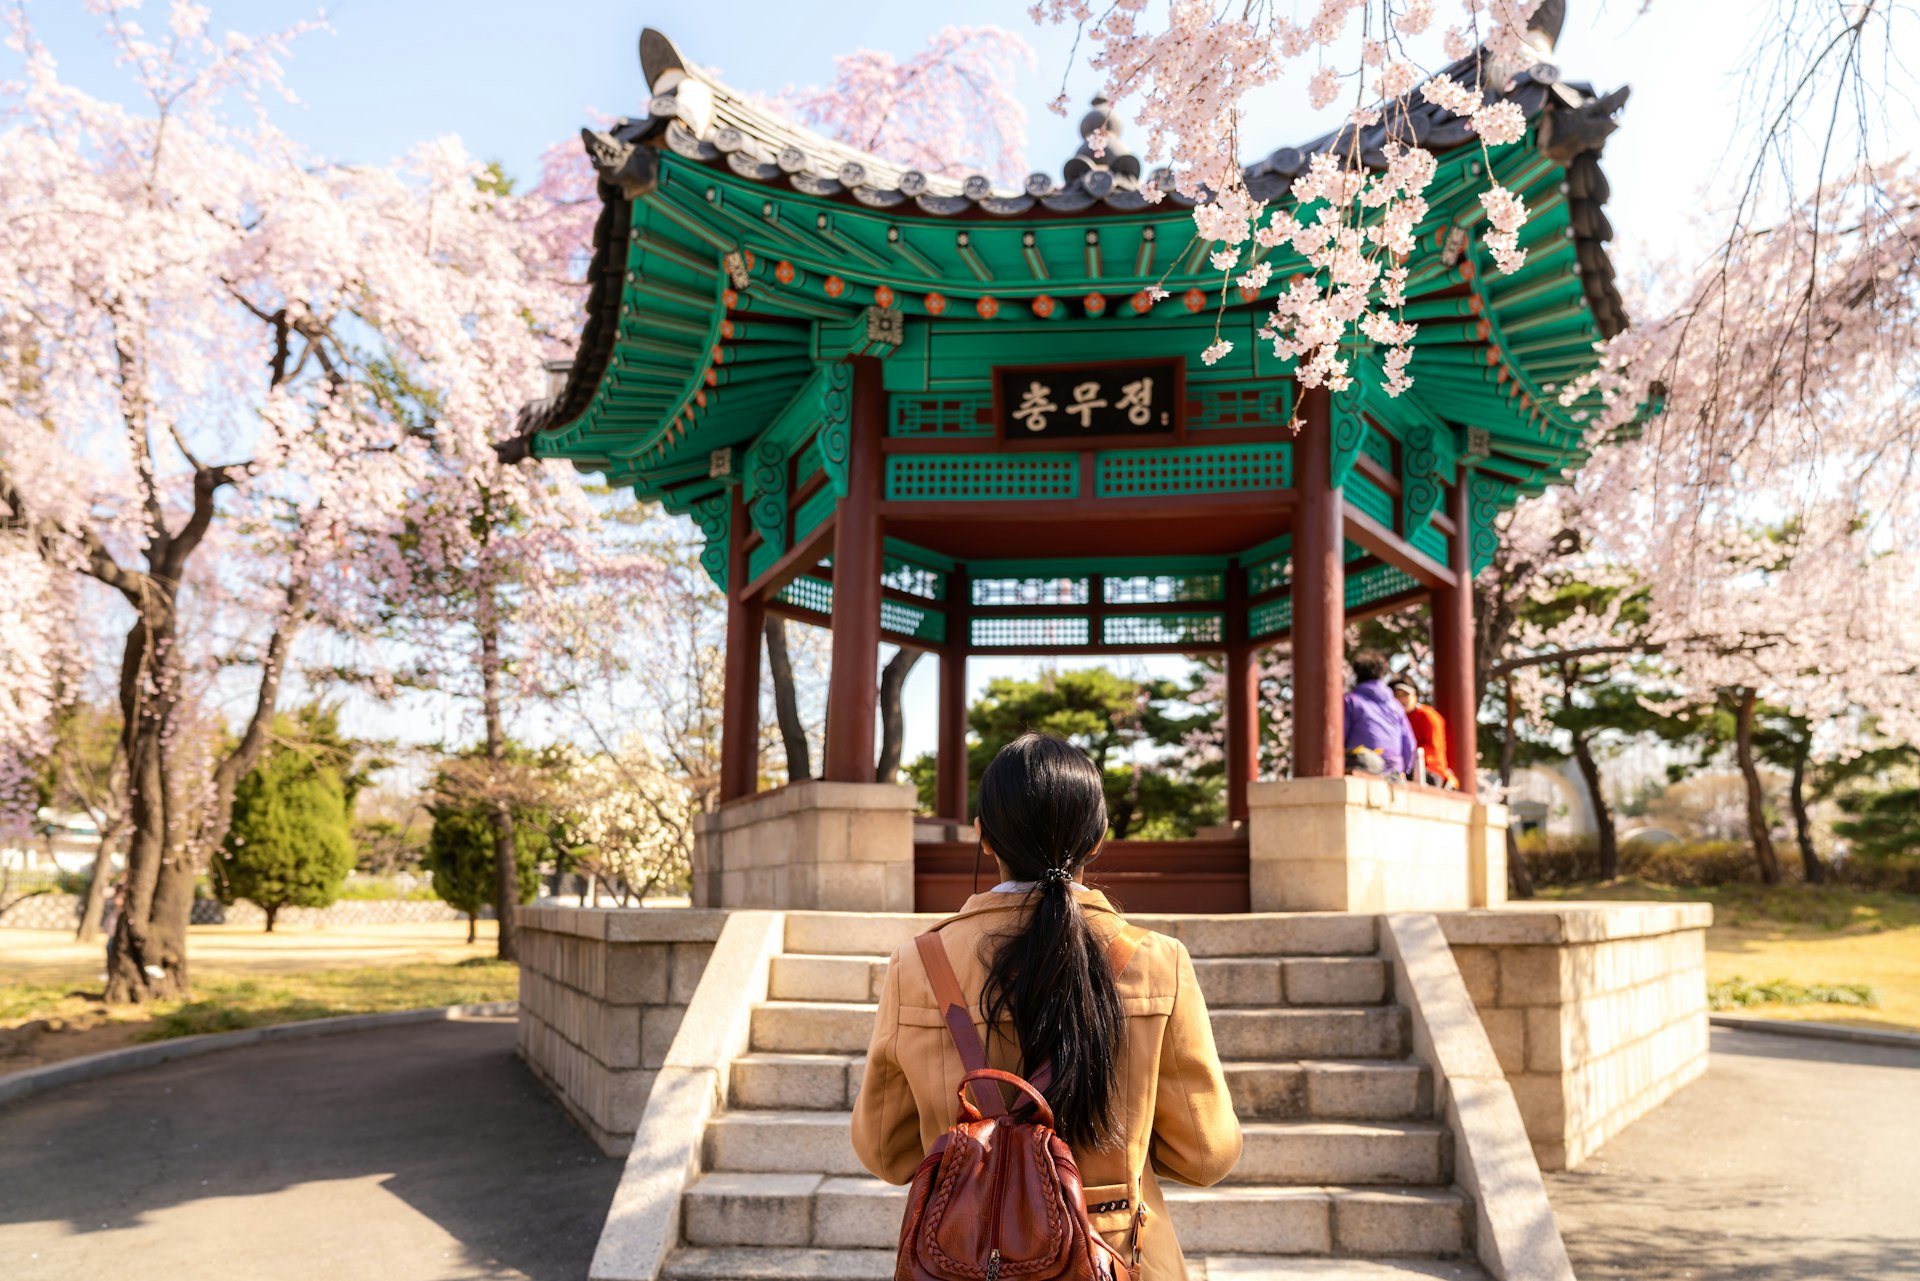 Asian woman at a Korean pavilion in cherry blossom season, Seoul, South Korea